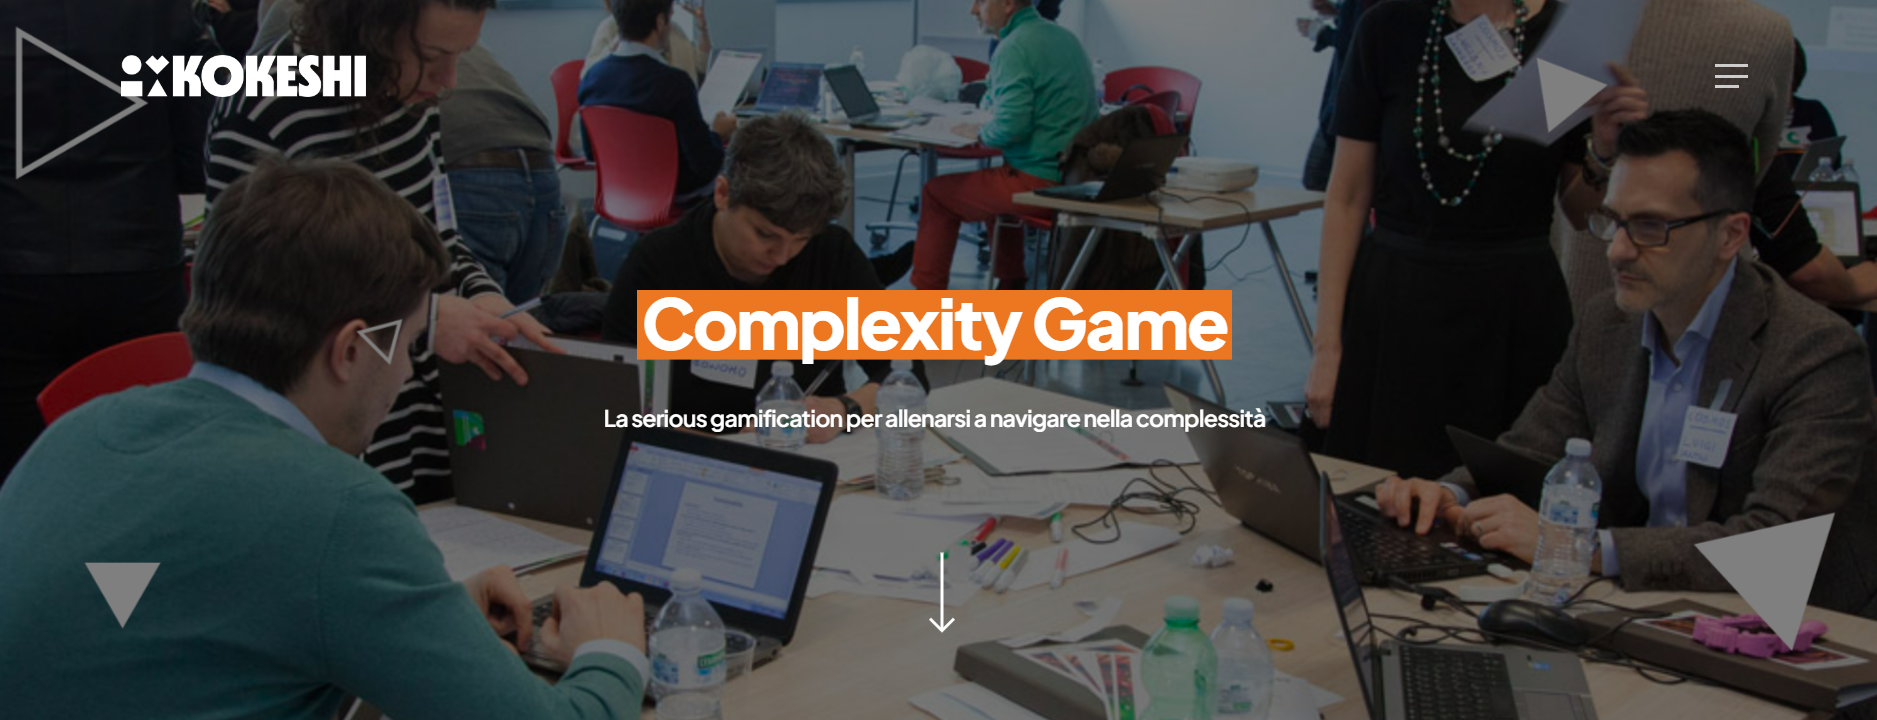 Copertina del format Complexity Game di Kokeshi Coloured HR